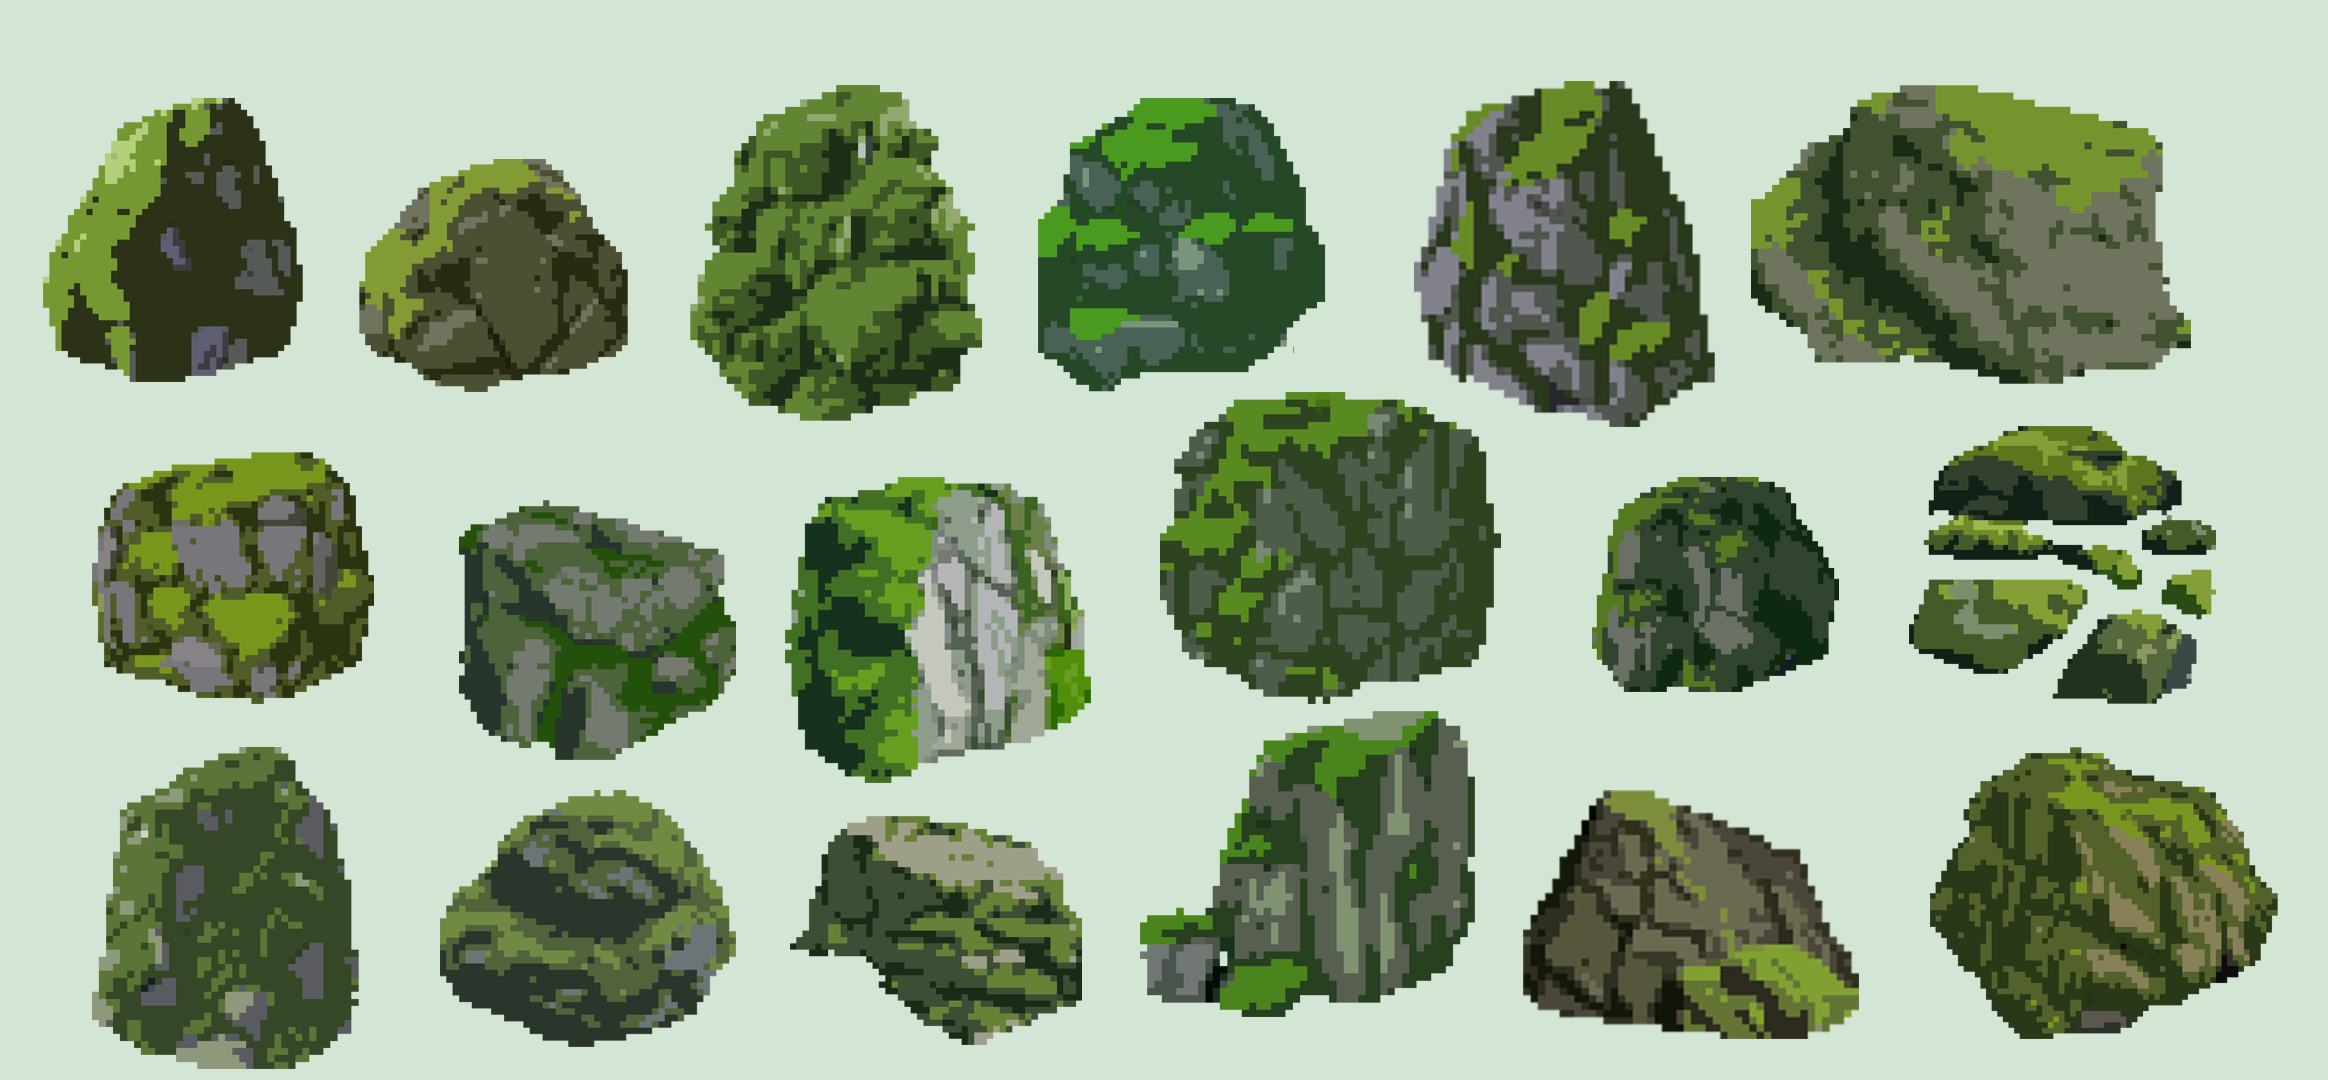 Mossy rocks